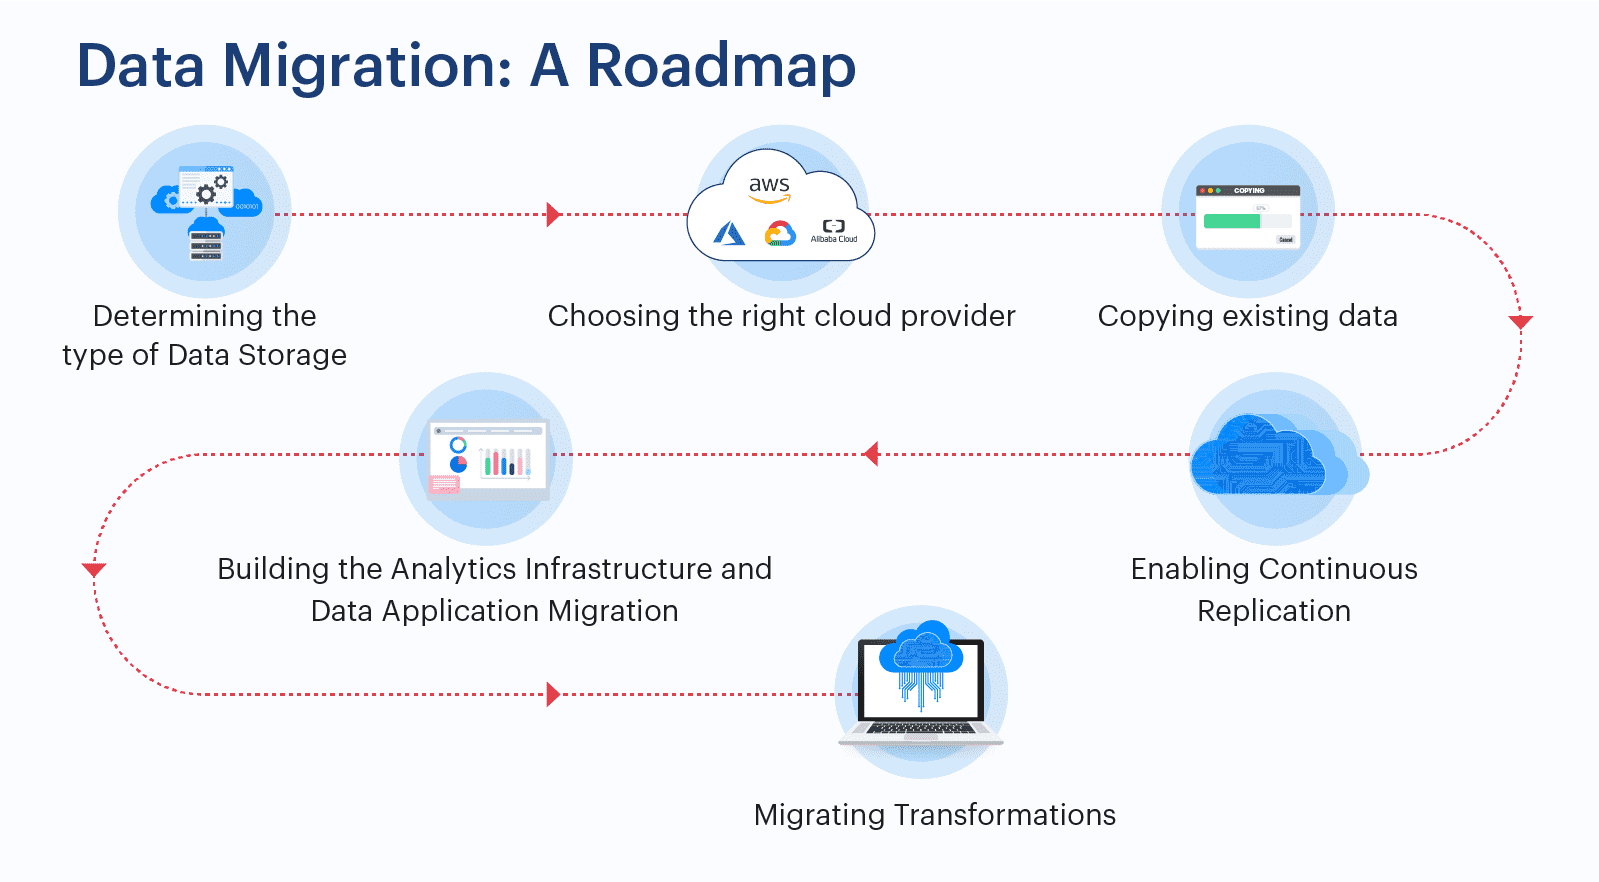 Data migration: A roadmap